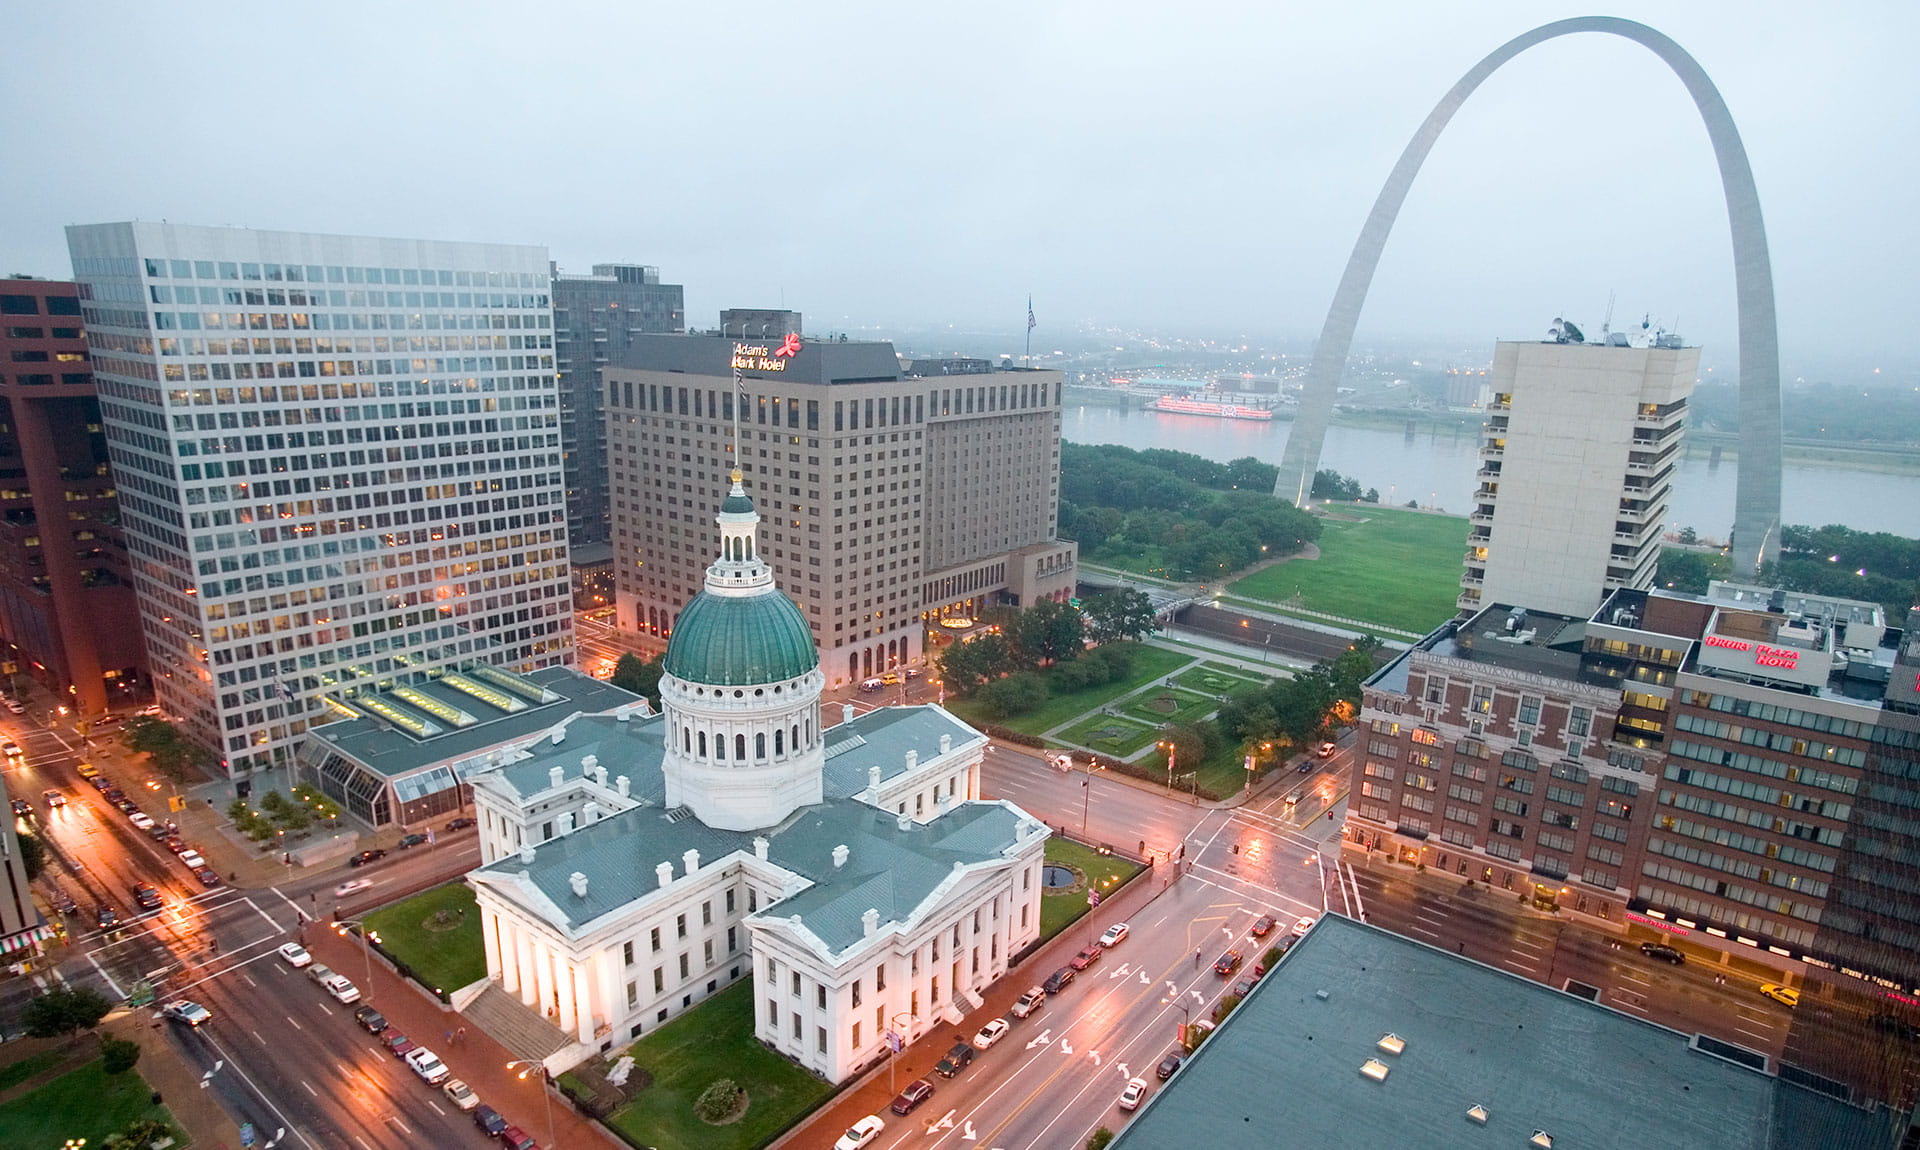 Bird's eye view of St. Louis